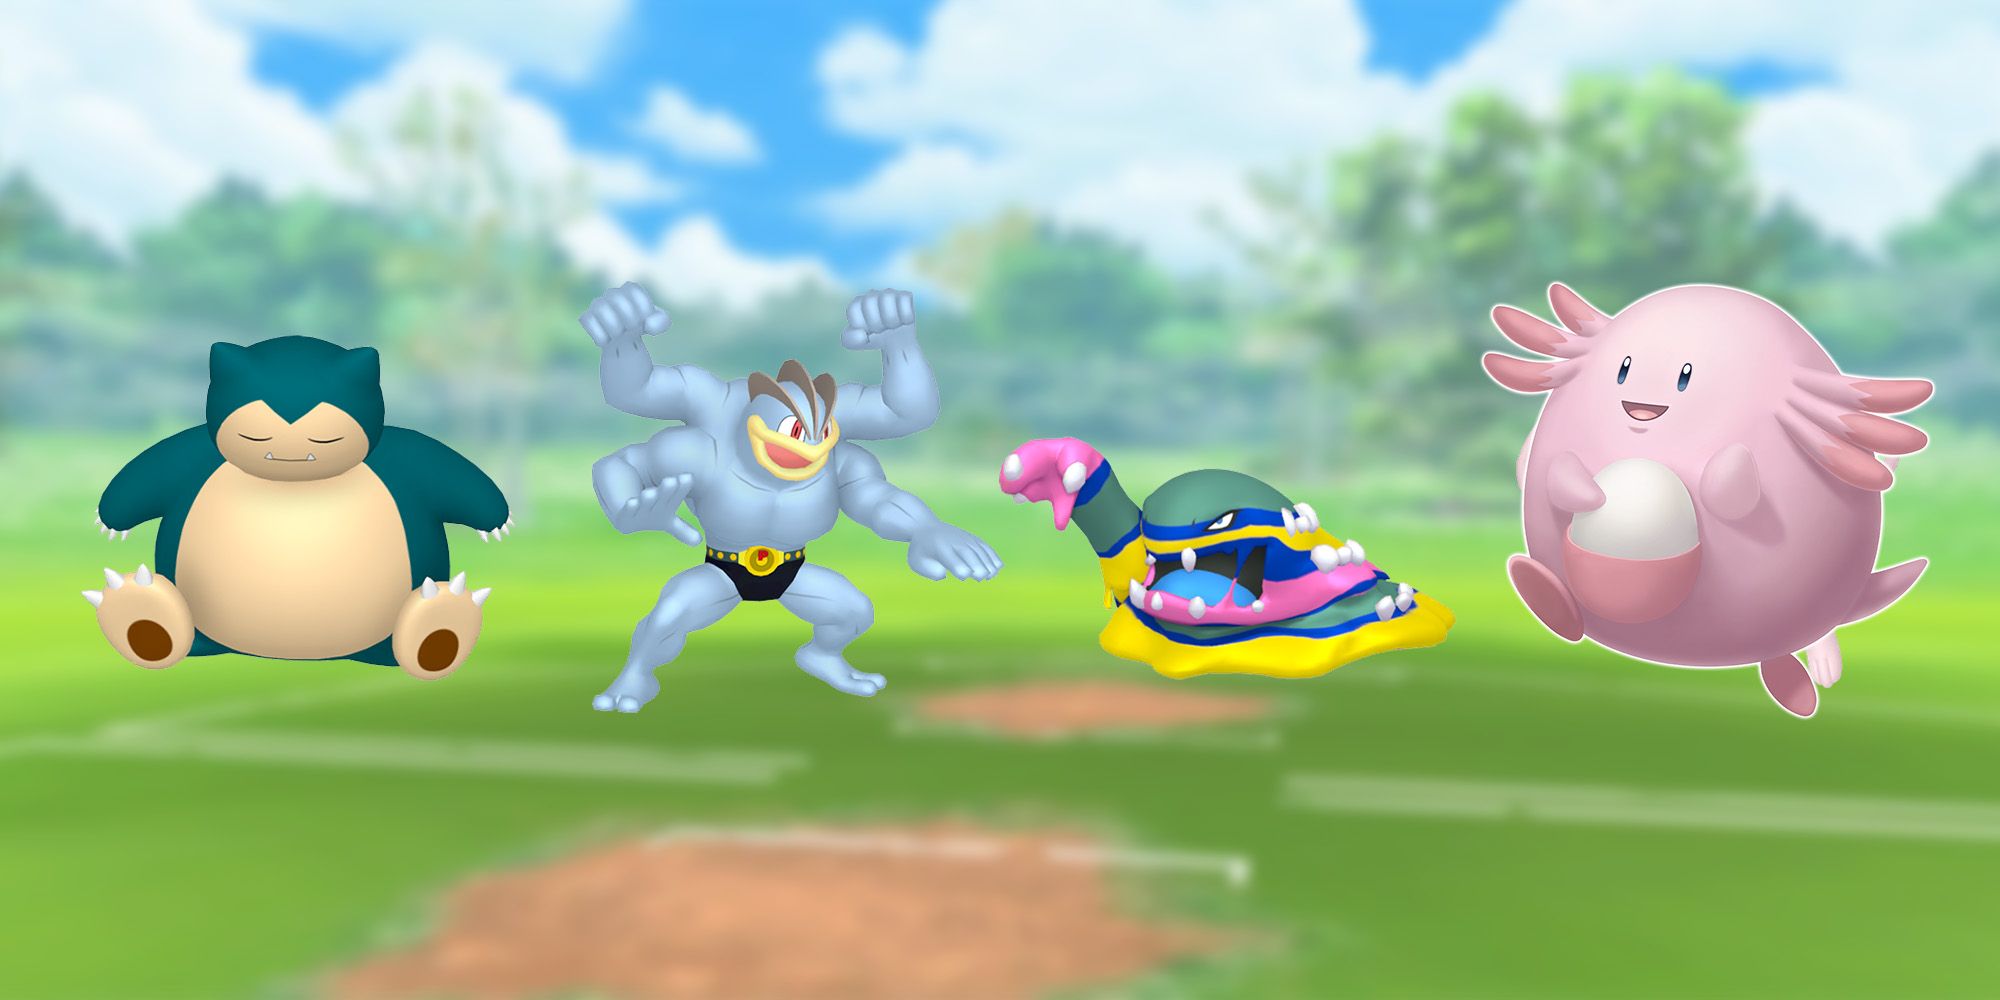 Pokemon Go Kanto Cup Closers - Snorlax, Machamp, Alolan Muk, Chansey